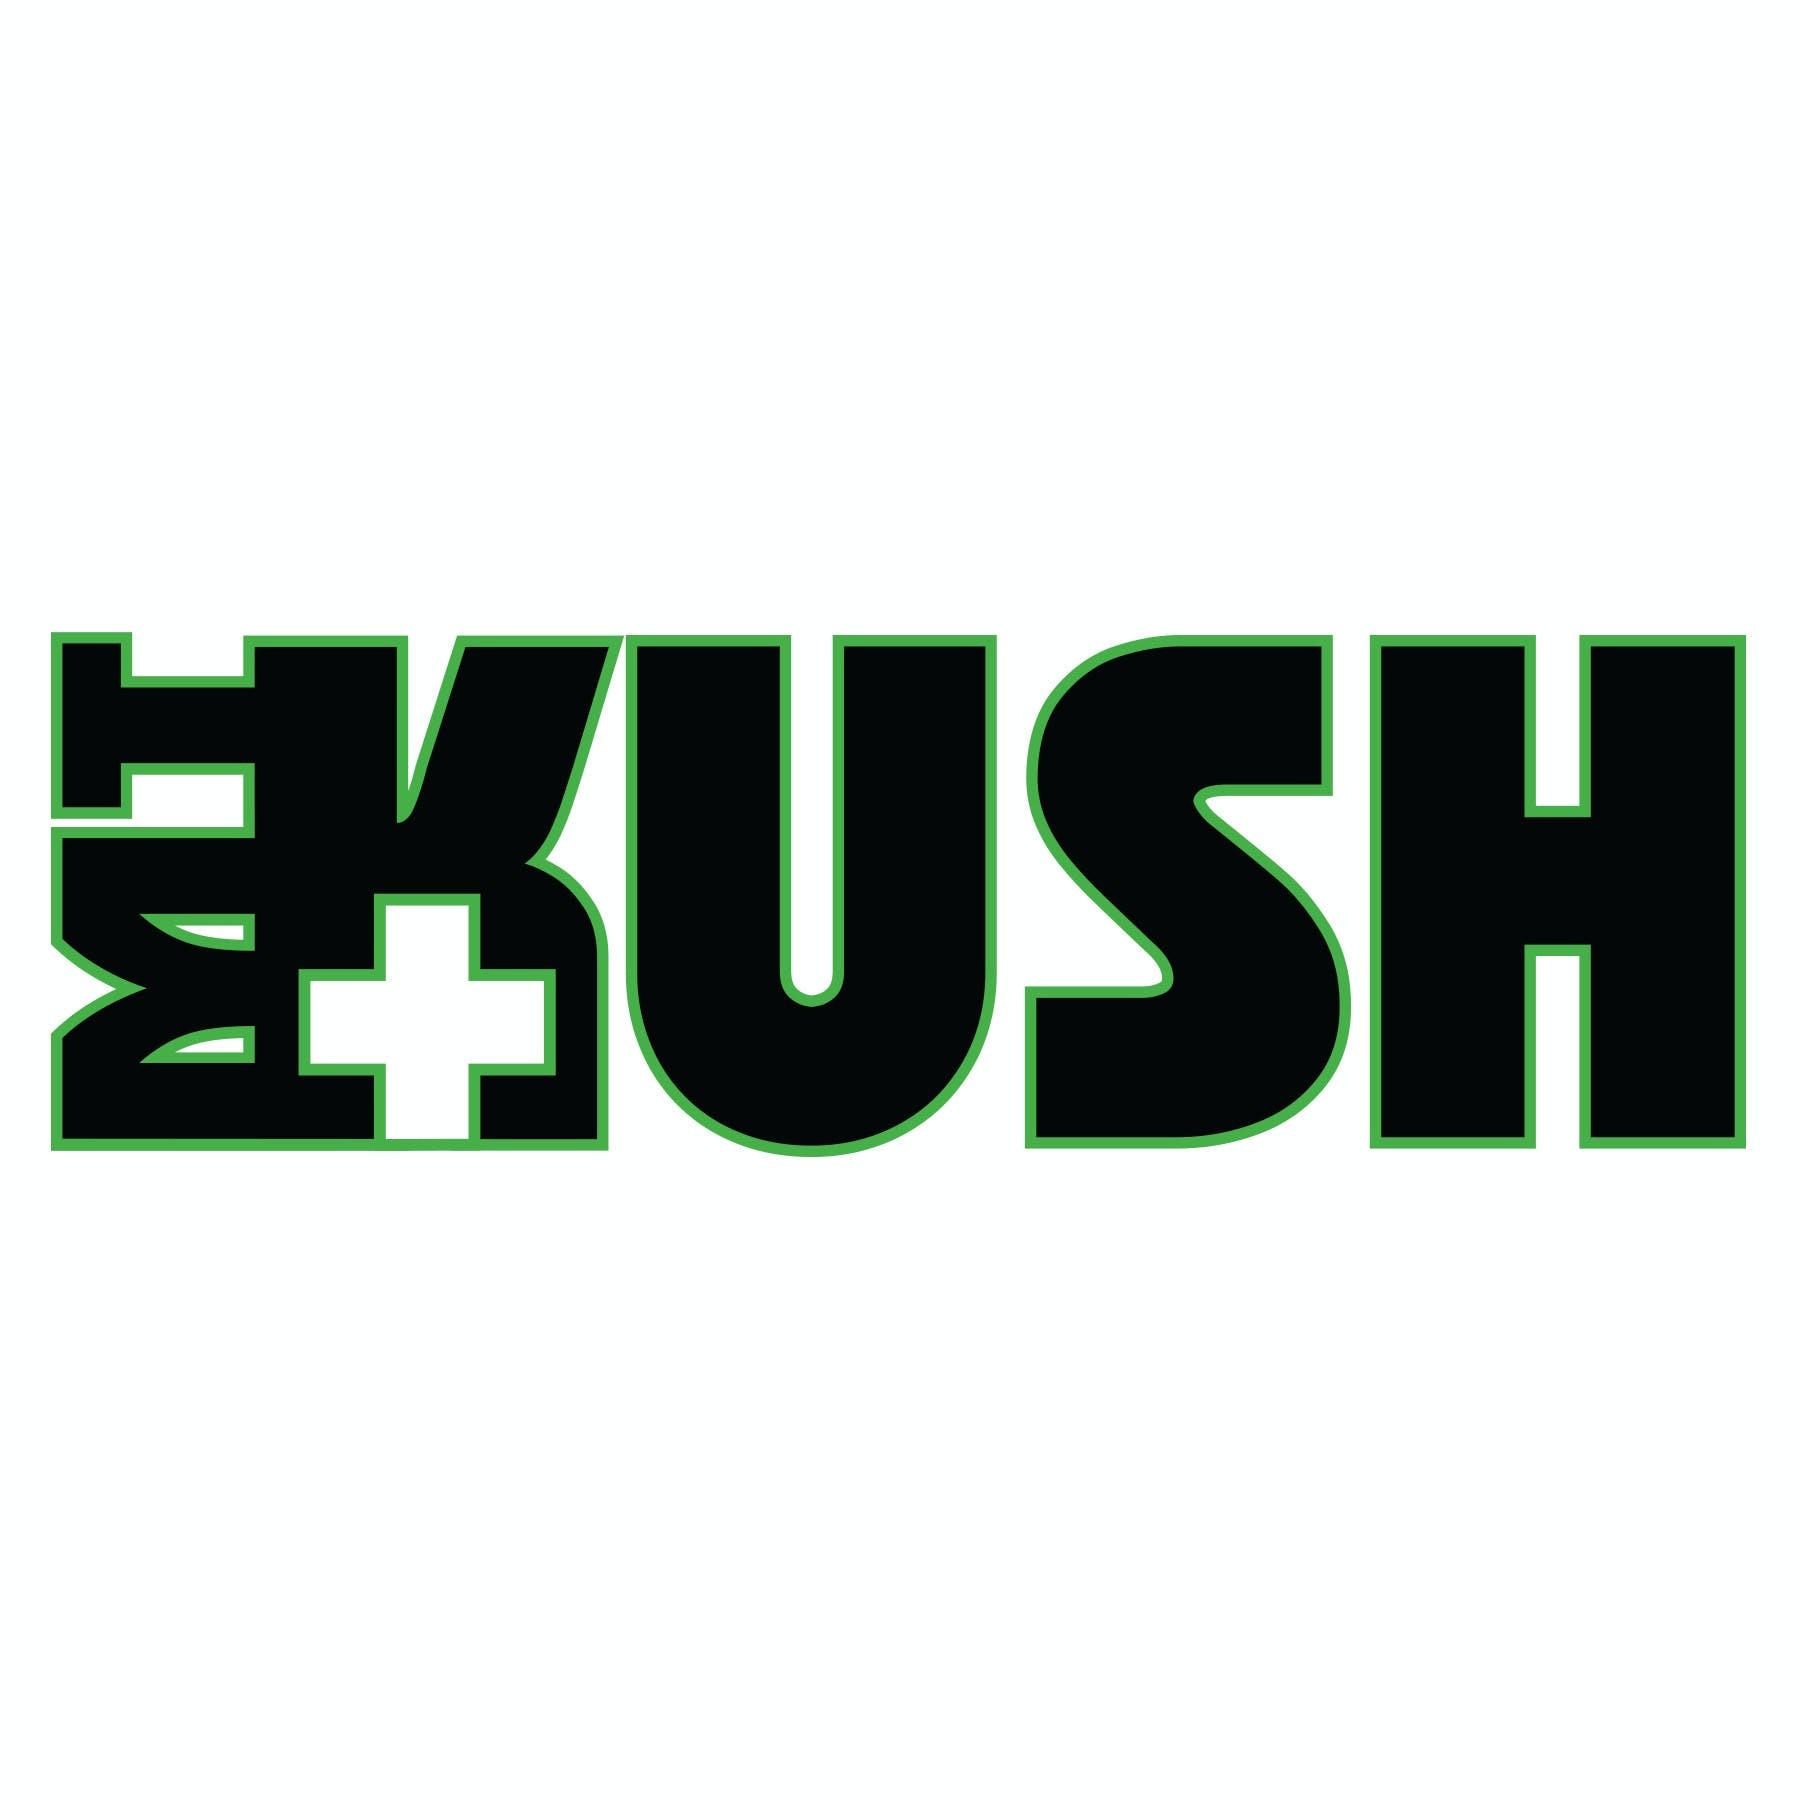 Montana Kush logo